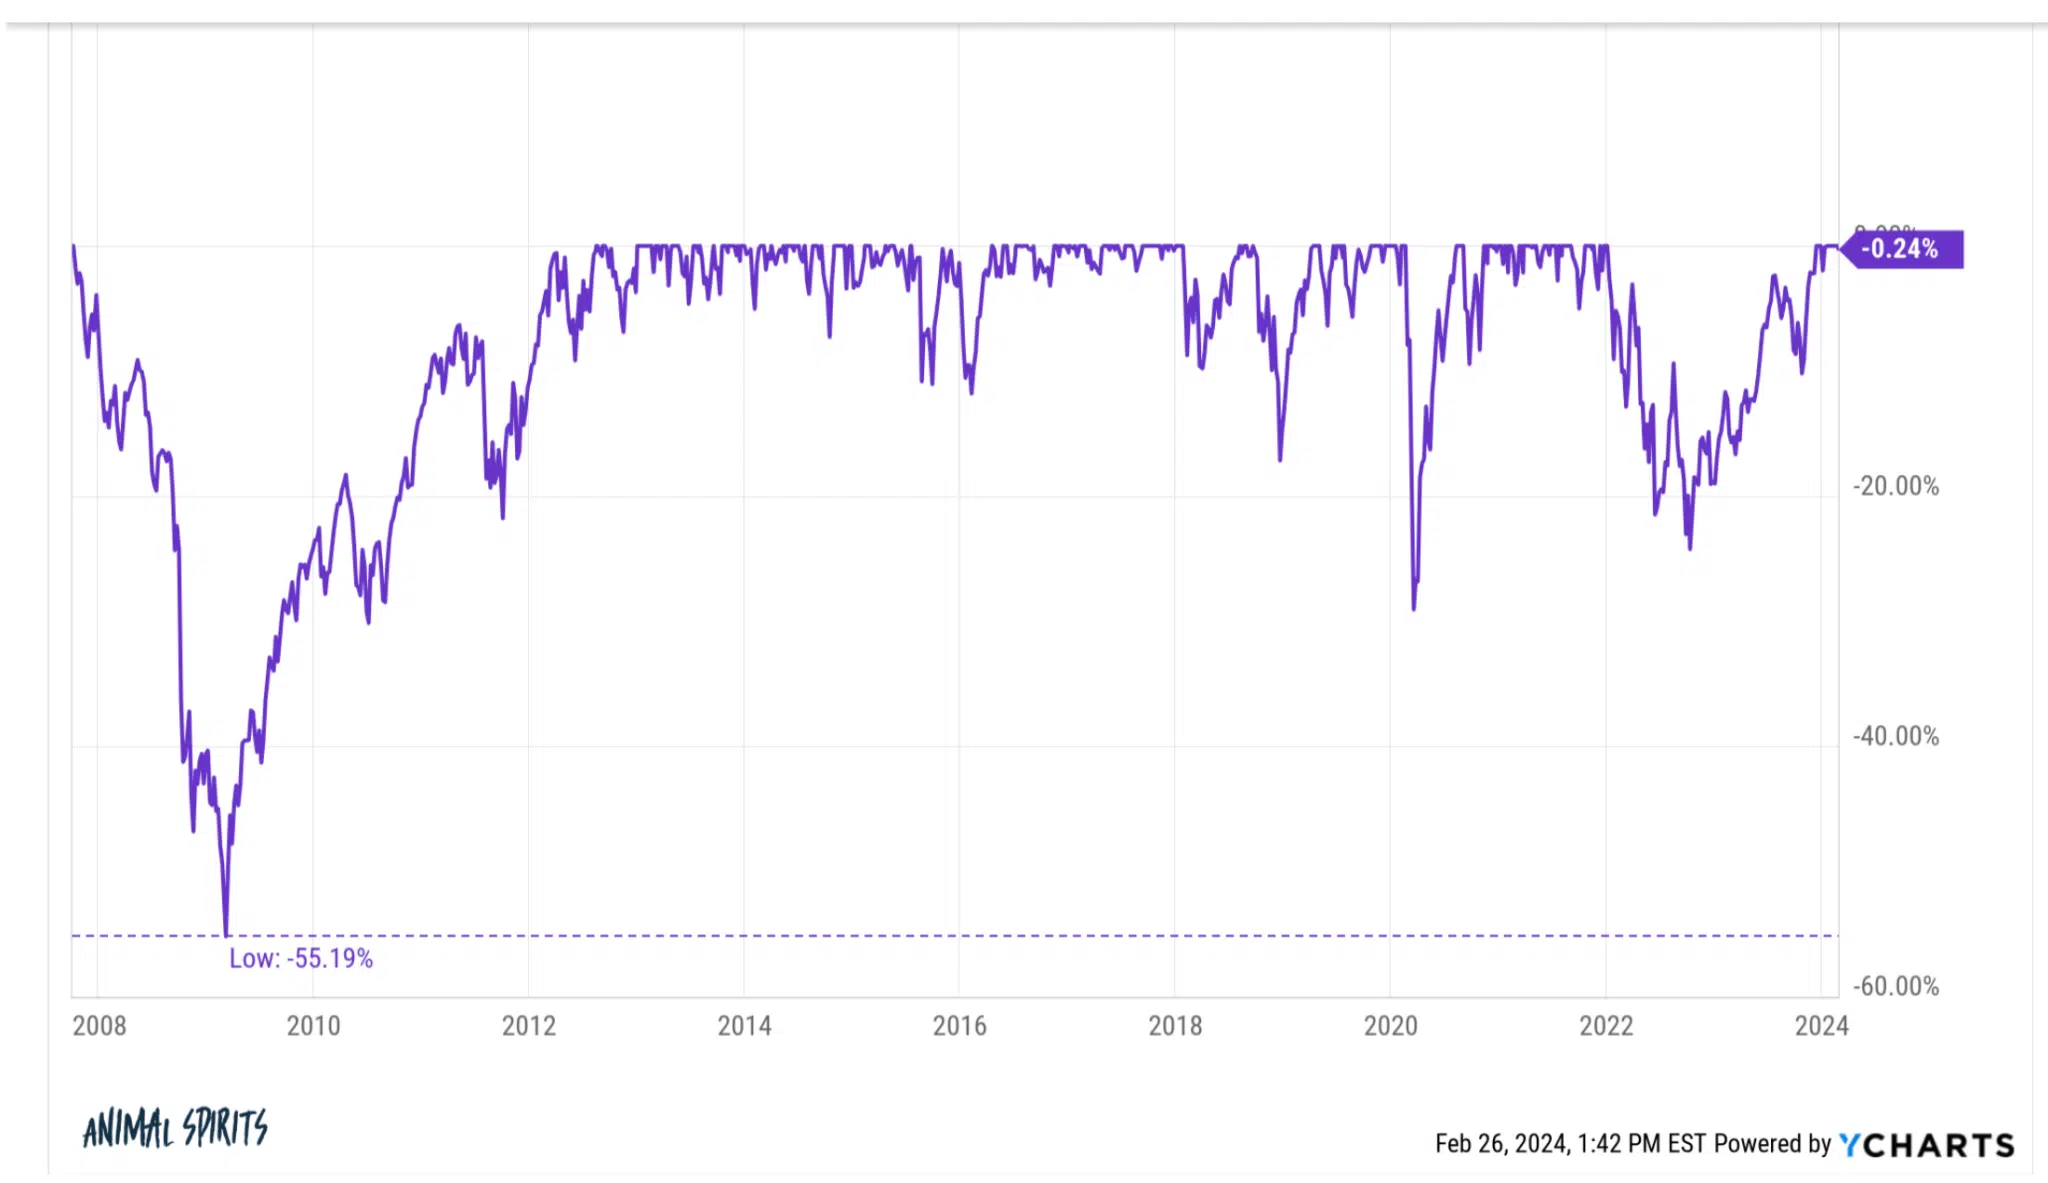 Market Downturns Since 2008